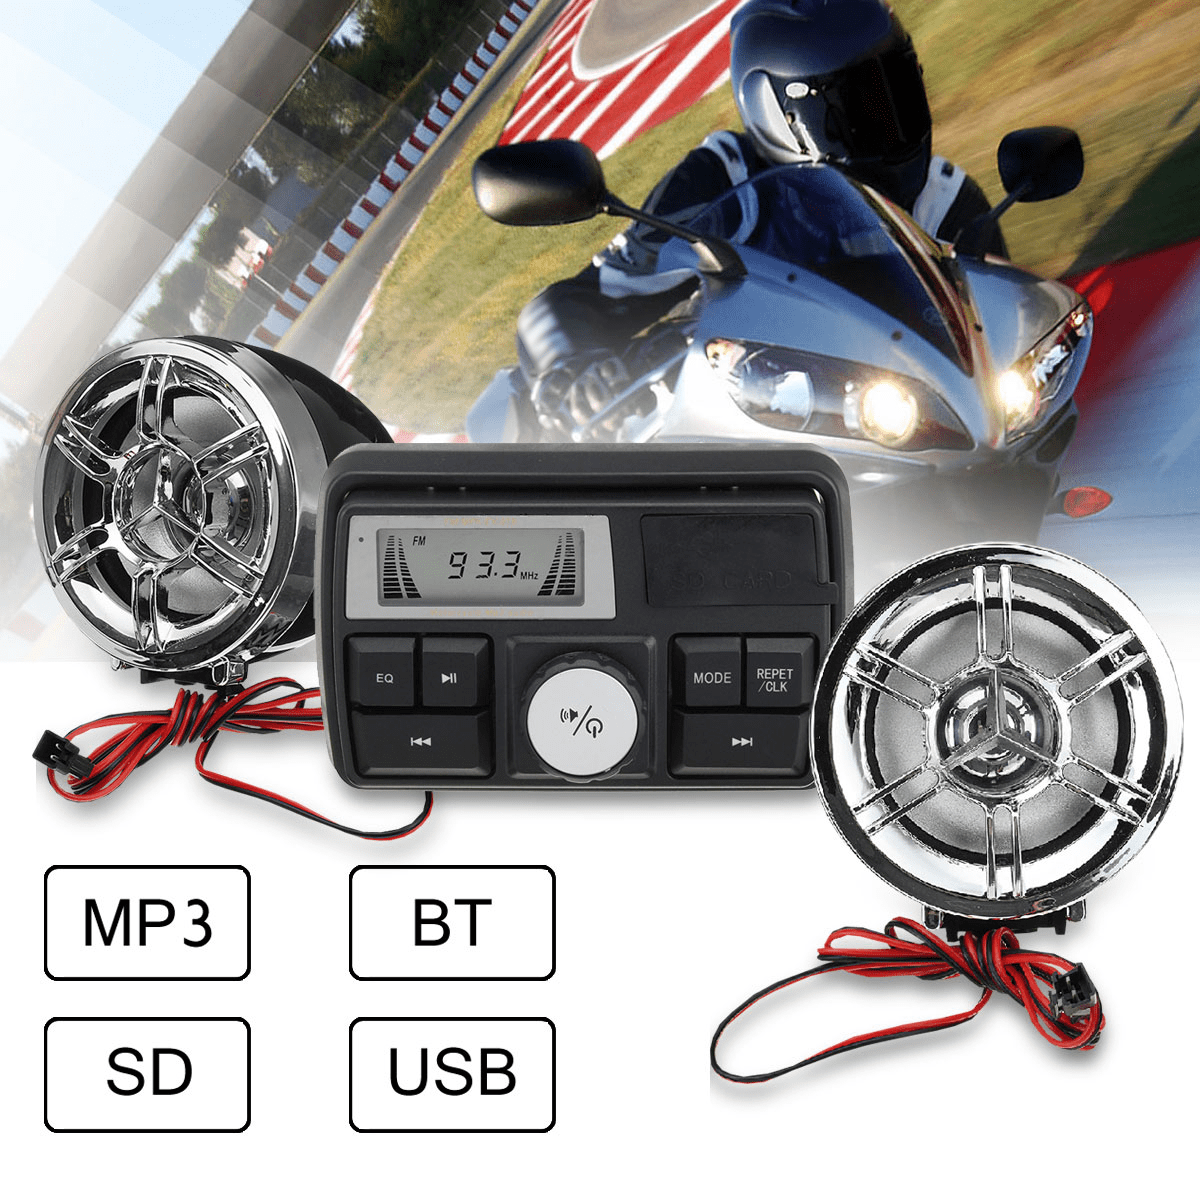 Motorcycle FM Audio Radio Sound System Stereo Speakers MP3 Digital Clock Alarmer